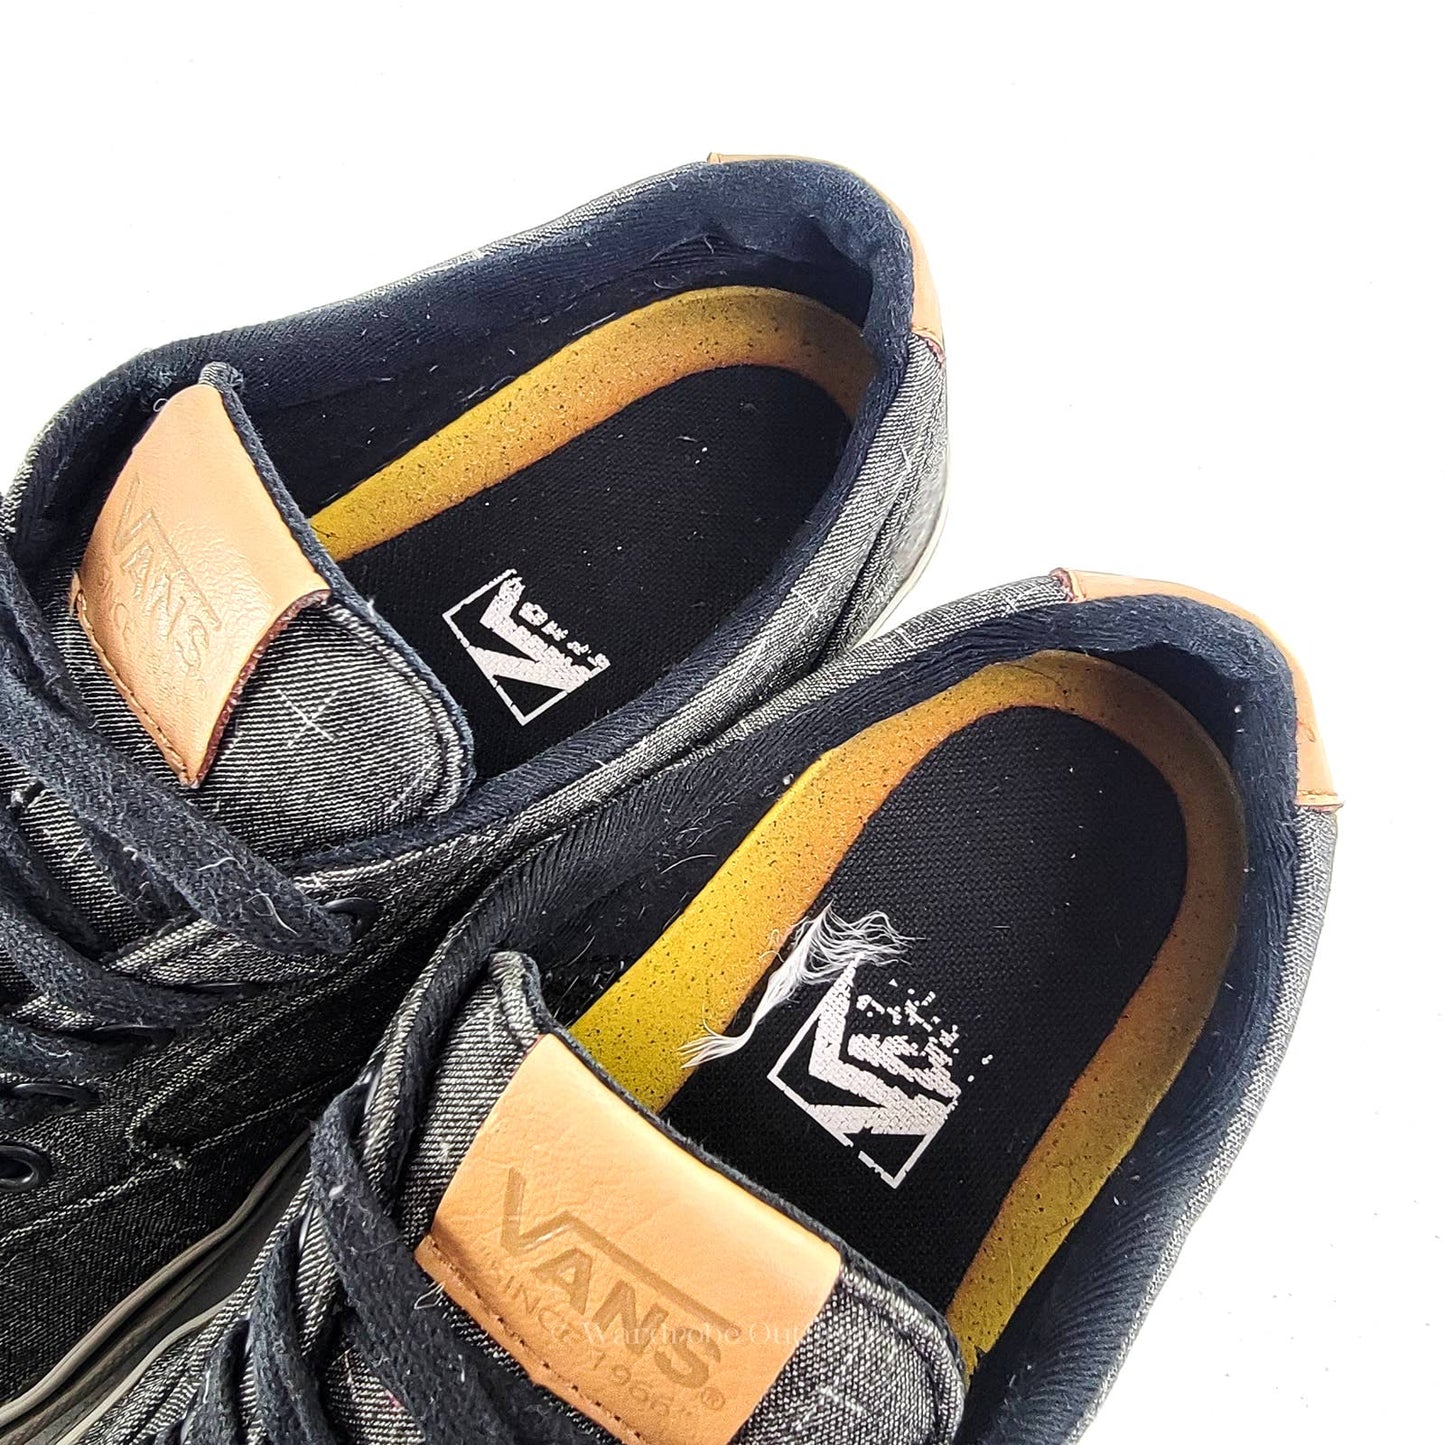 VANS Atwood Deluxe Ultra Cush Low Top Sneakers - 9/11